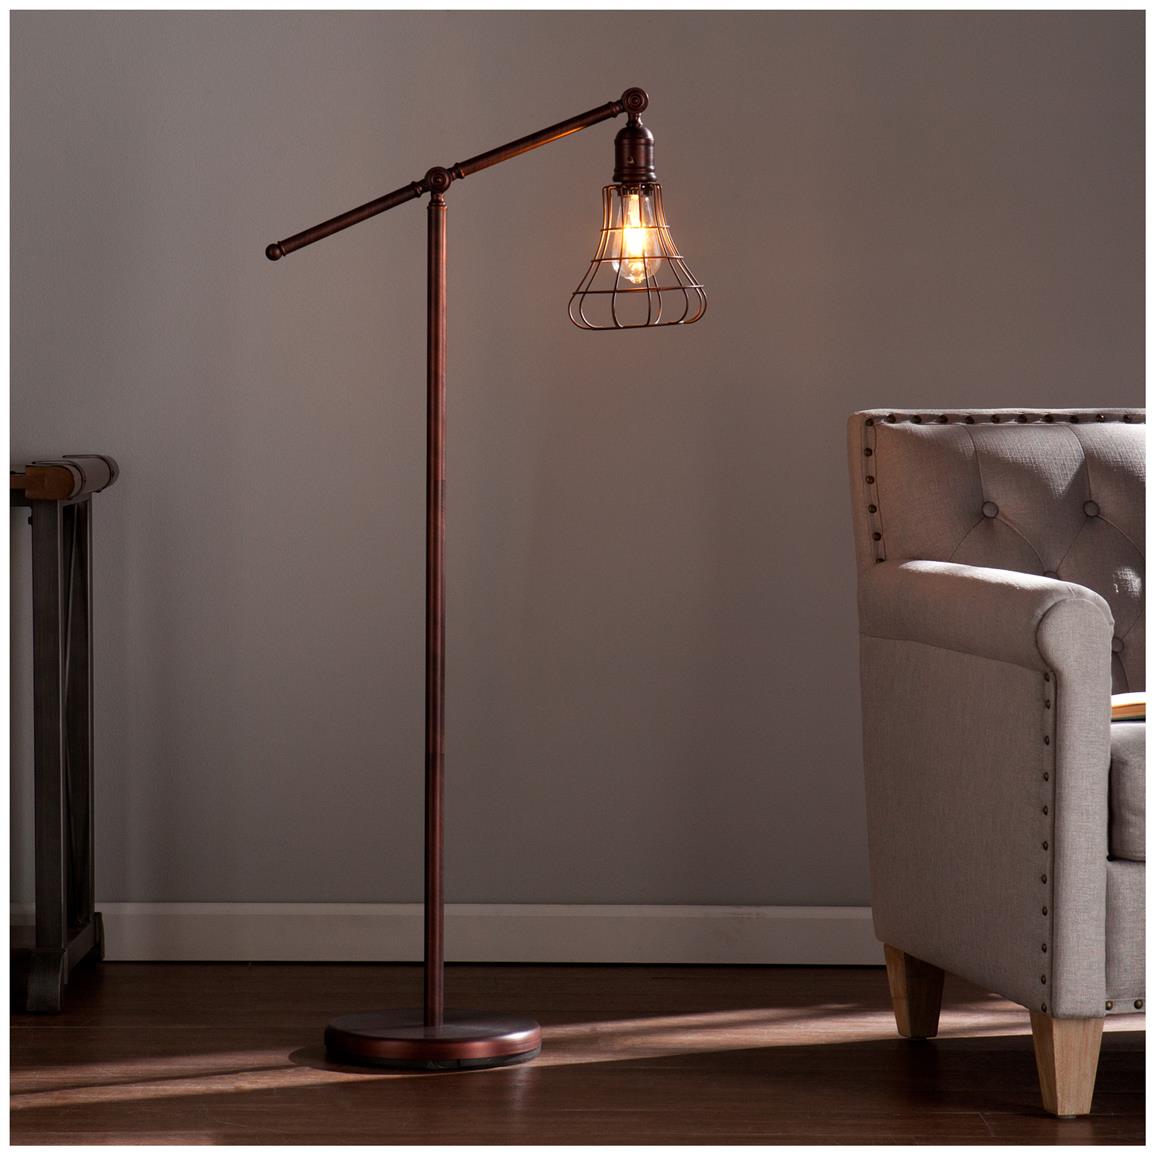 Trayden Floor Lamp, Edison Bulb - 671450, Lighting at Sportsman's Guide